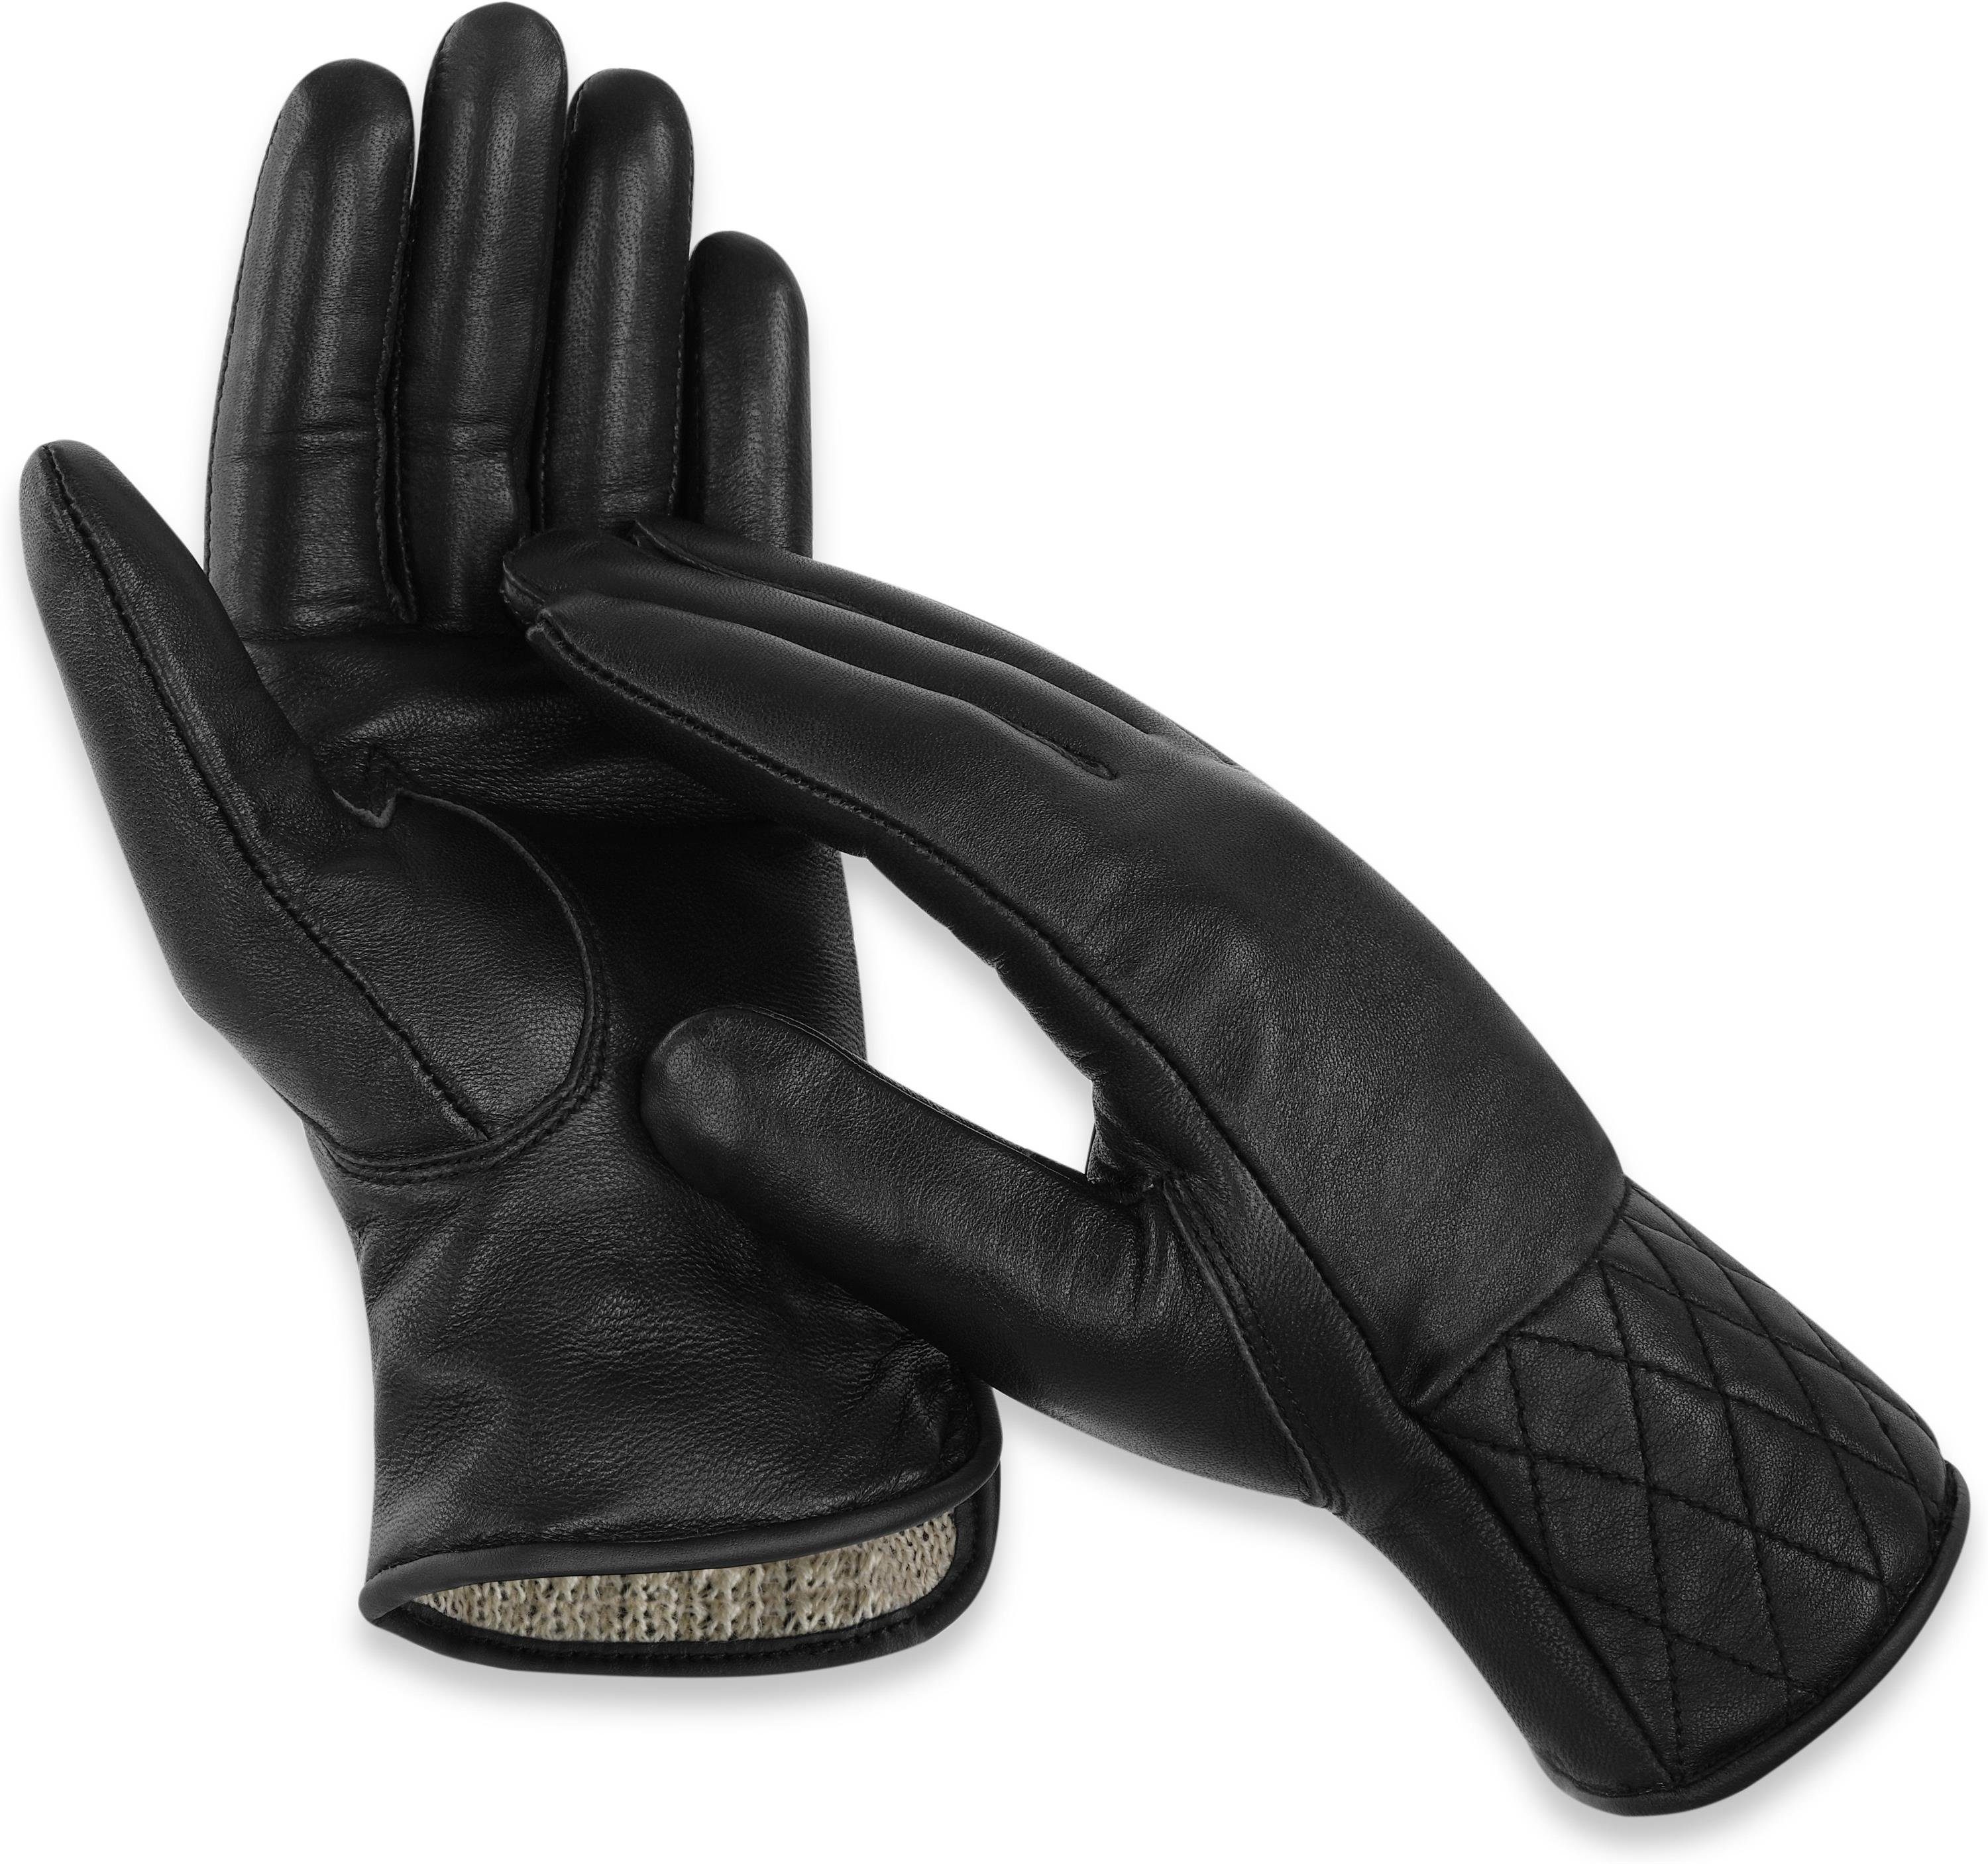 Drammen normani Skihandschuhe Handschuhe EchtLeder Damen Fingerhandschuhe für mit gefüttert Winterhandschuhe Reiner Lederhandschuhe Frauen Wolle